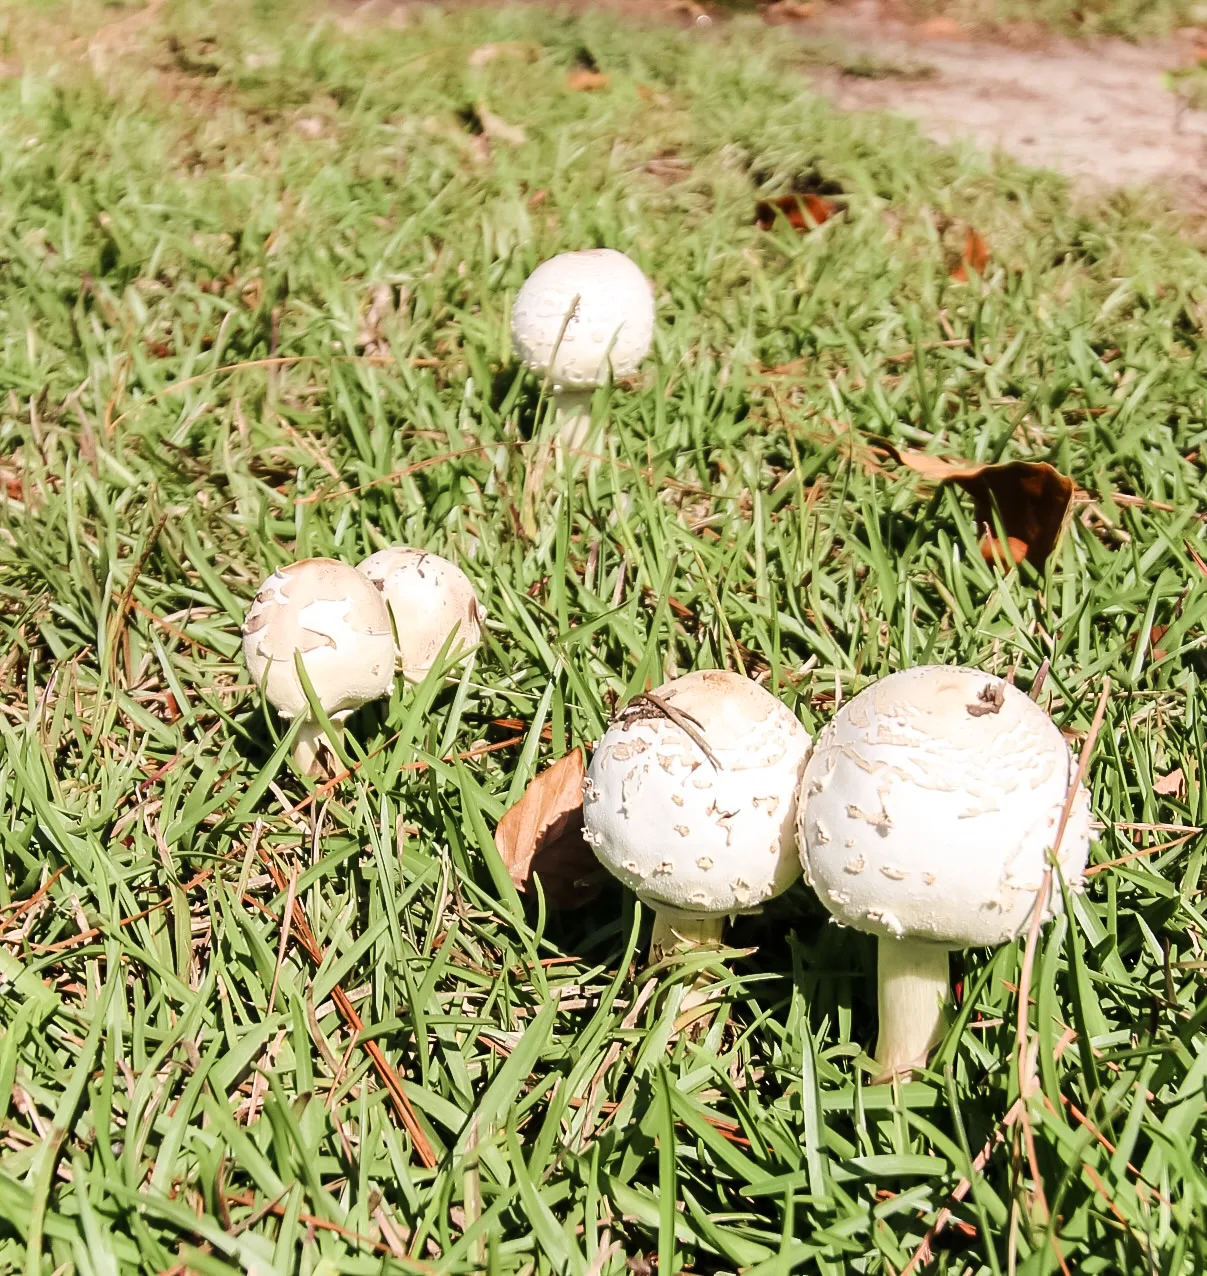 mushrooms in grass